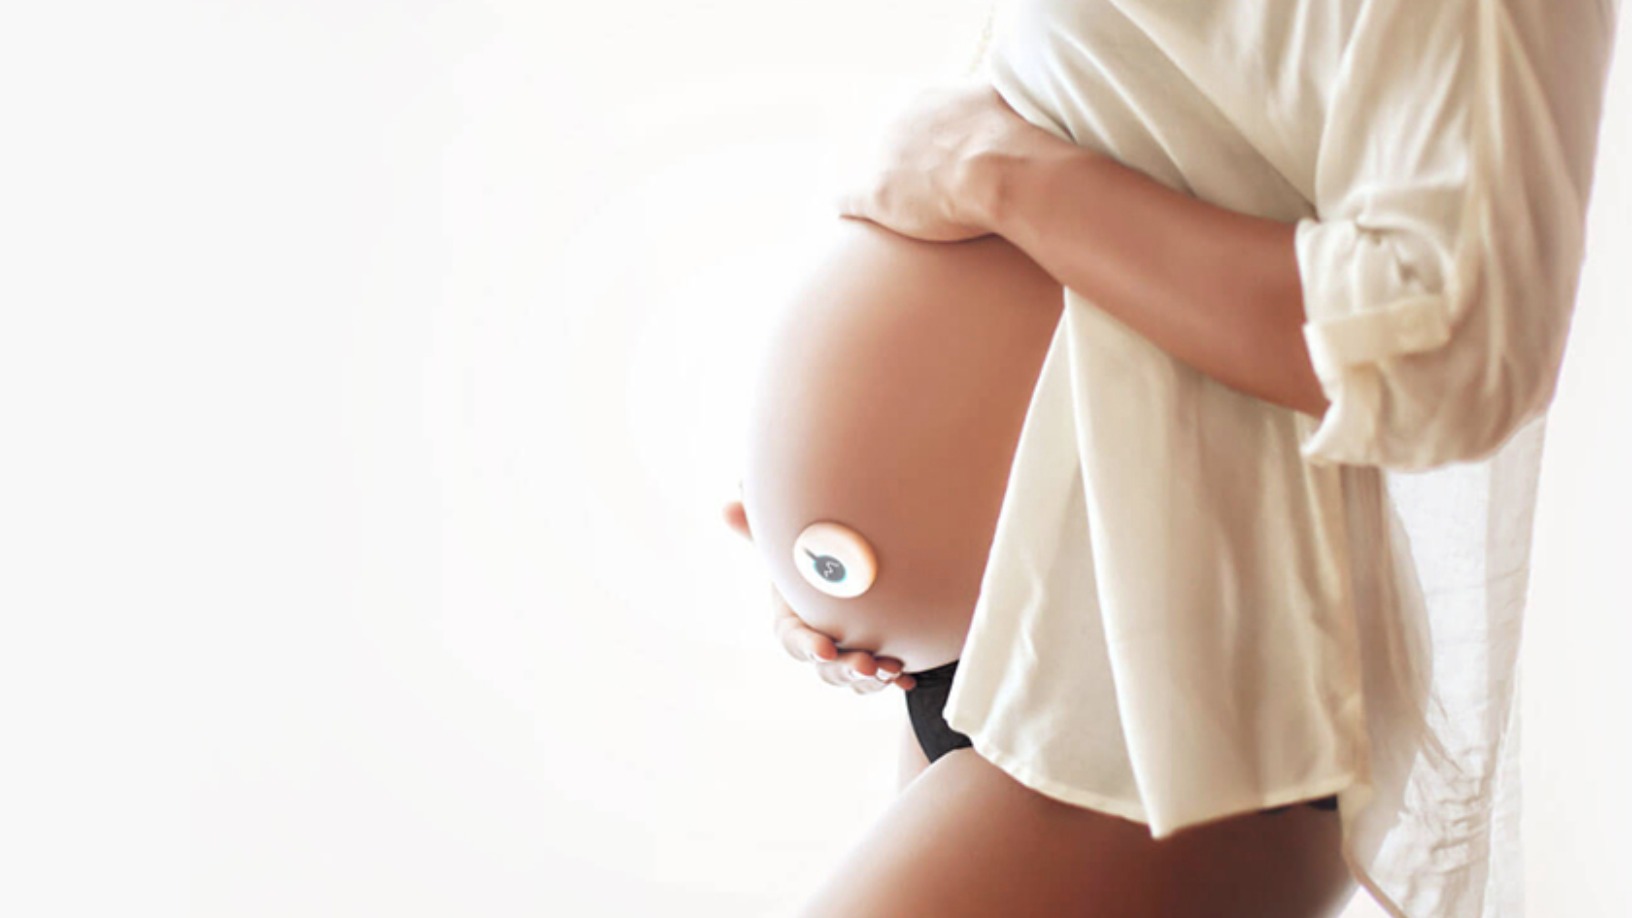 Modoo: Reducing stillbirth risk with fetal heart monitoring wearable